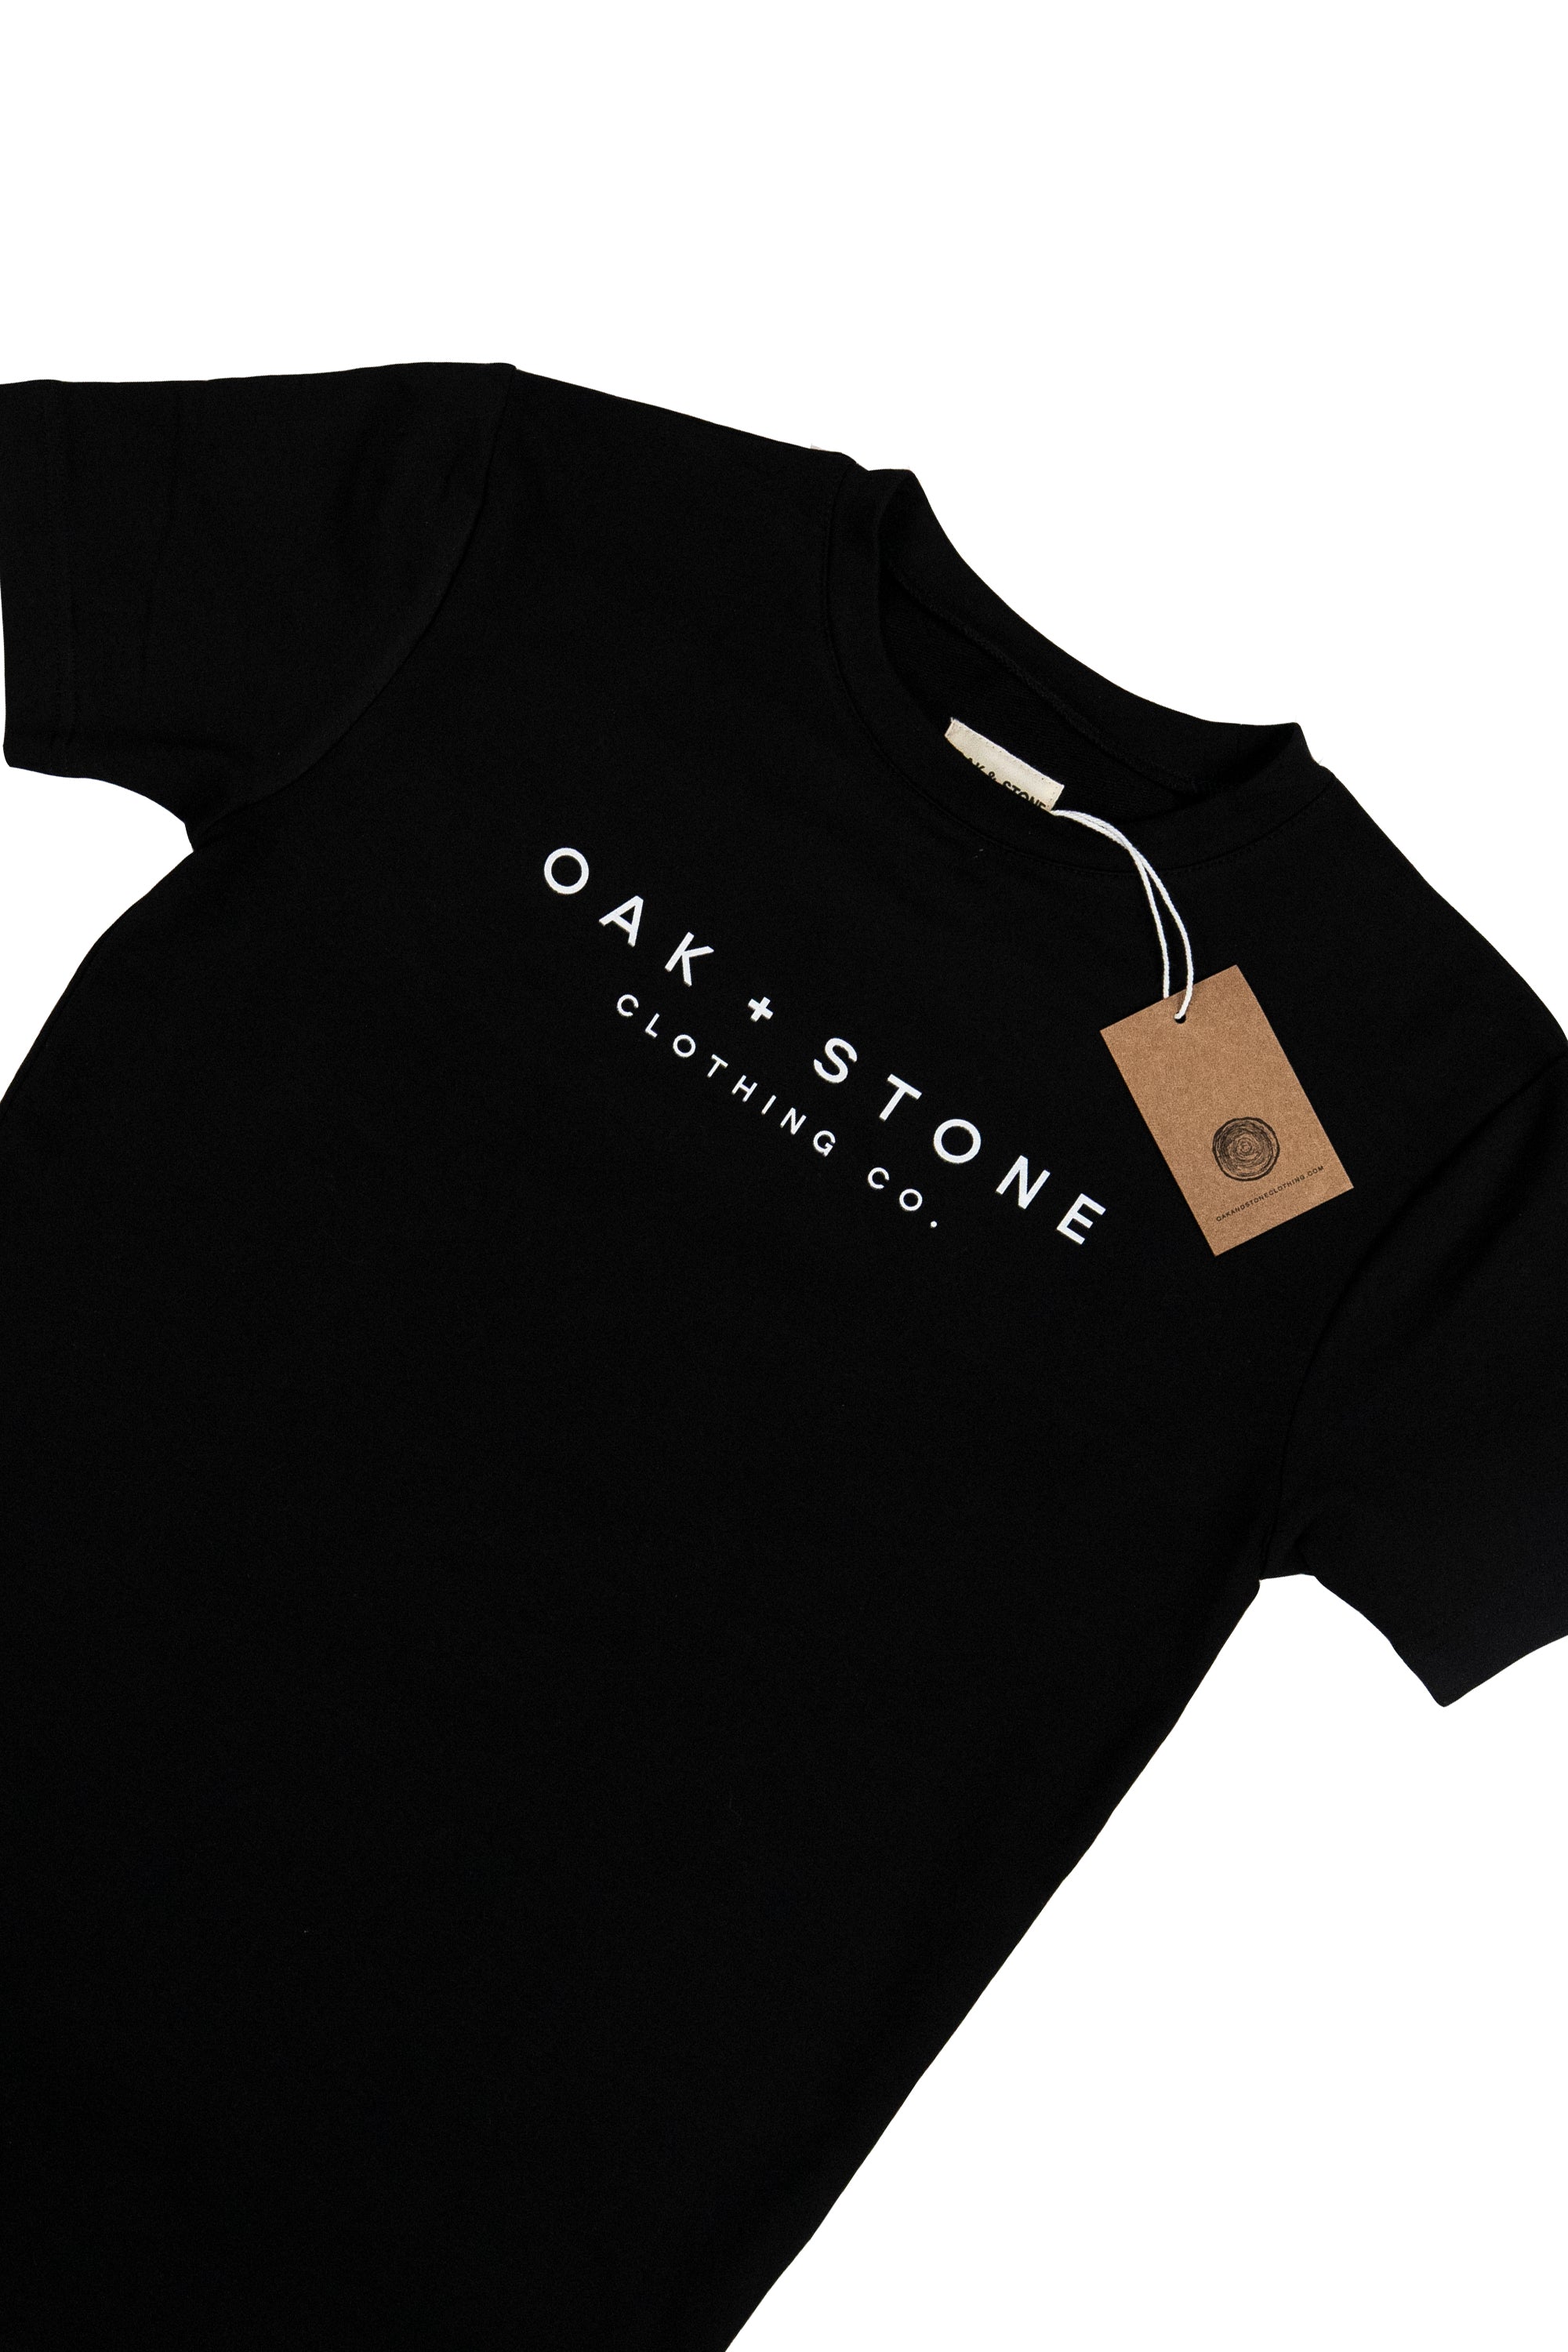 The Graphic Tee l Oak + Stone Clothing Co. l Black